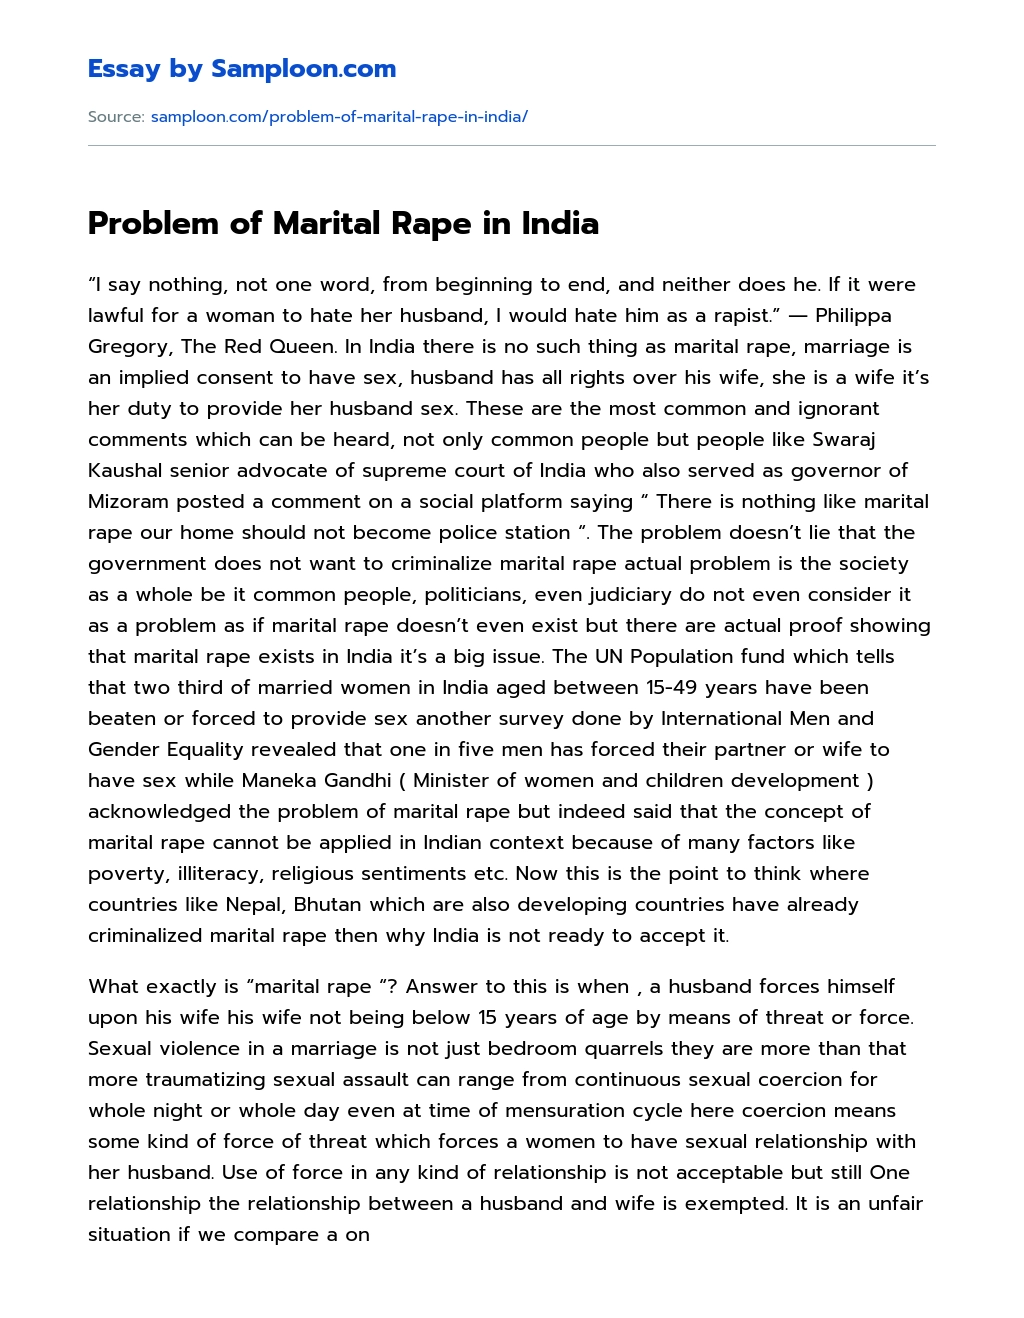 Problem of Marital Rape in India essay